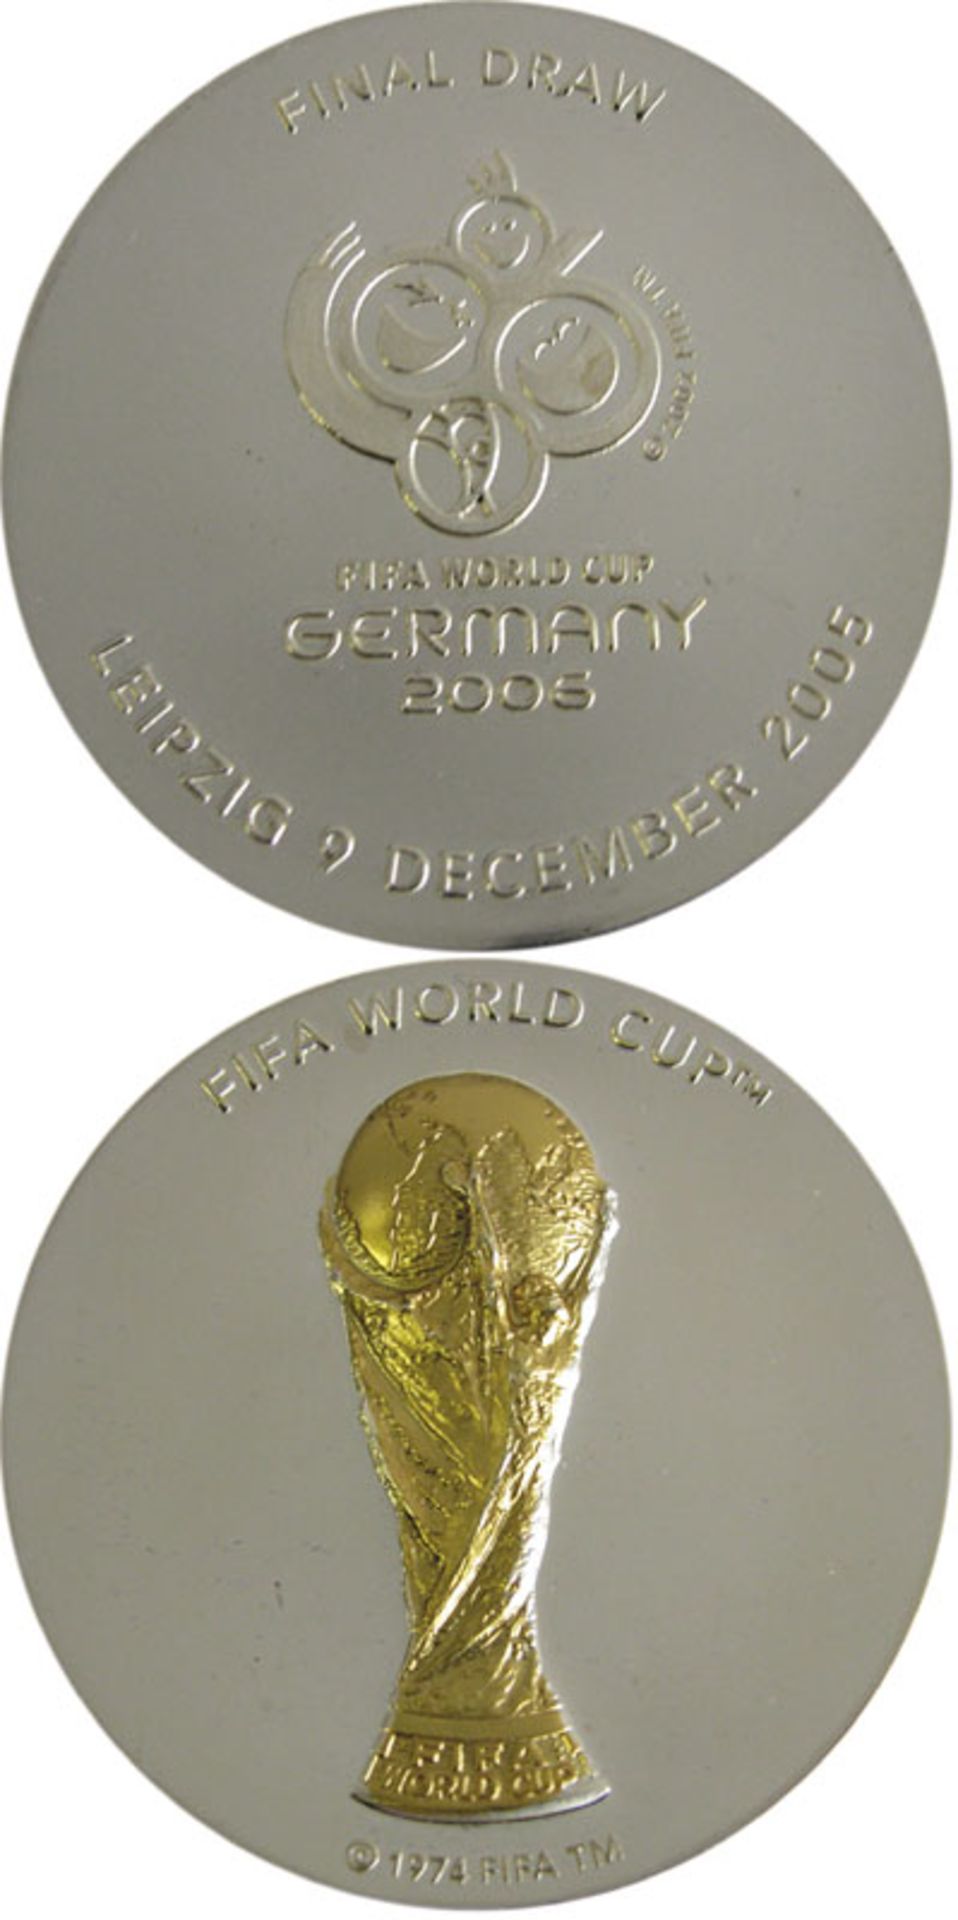 Teilnehmermedaille WM2006 - „FIFA World Cup“ Silbermedaille mit aufgesetztem goldenem Weltpokal.